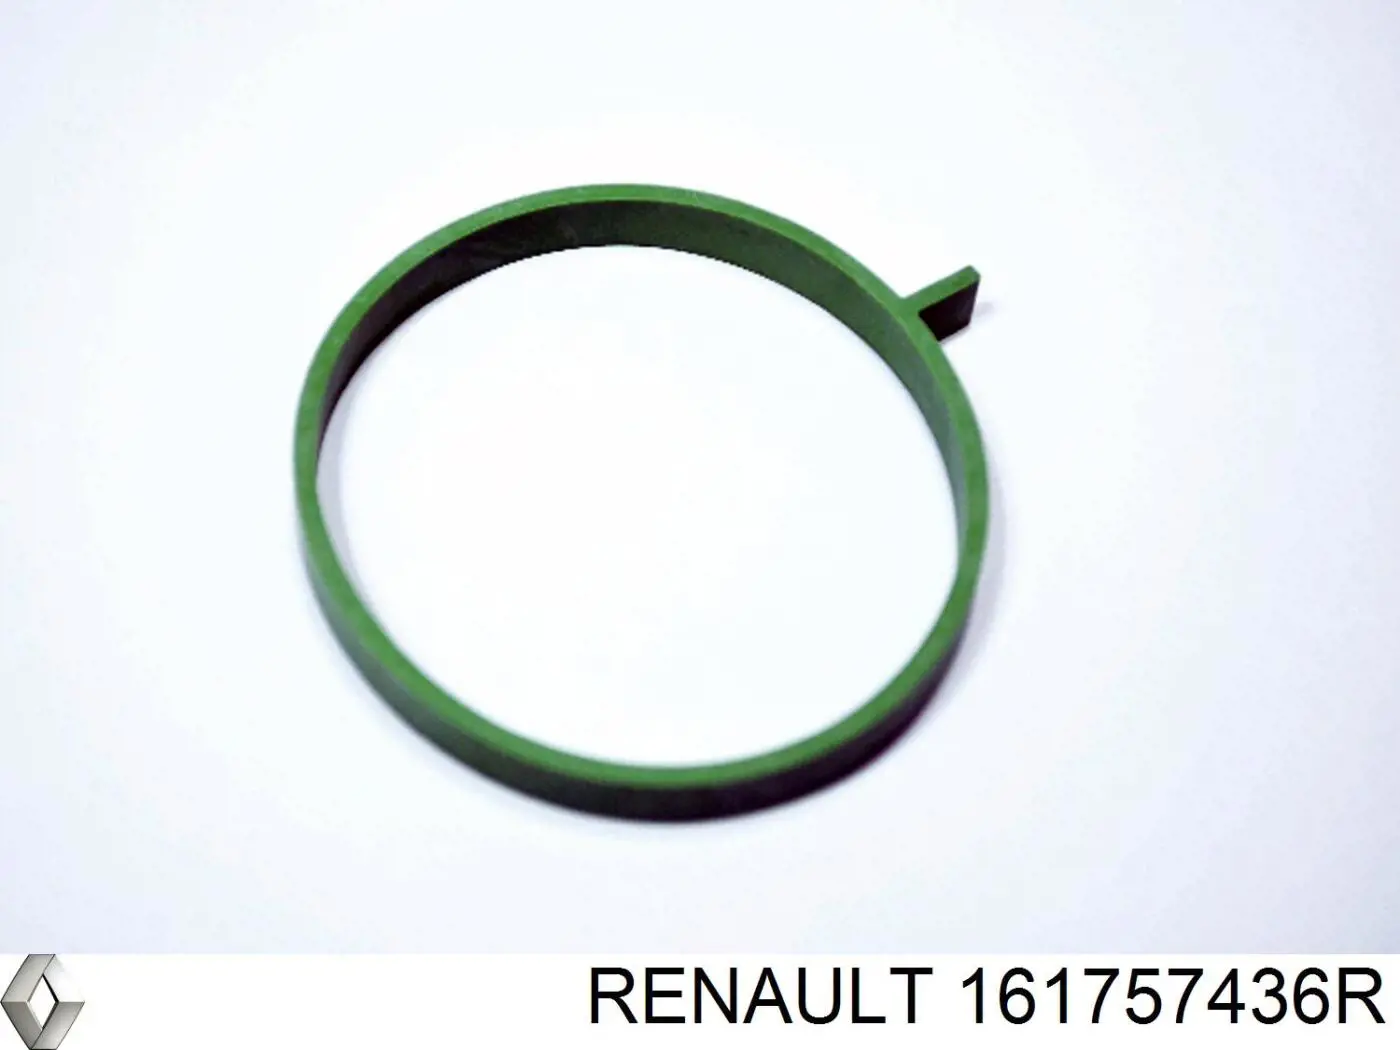 Junta cuerpo mariposa para Renault CAPTUR 